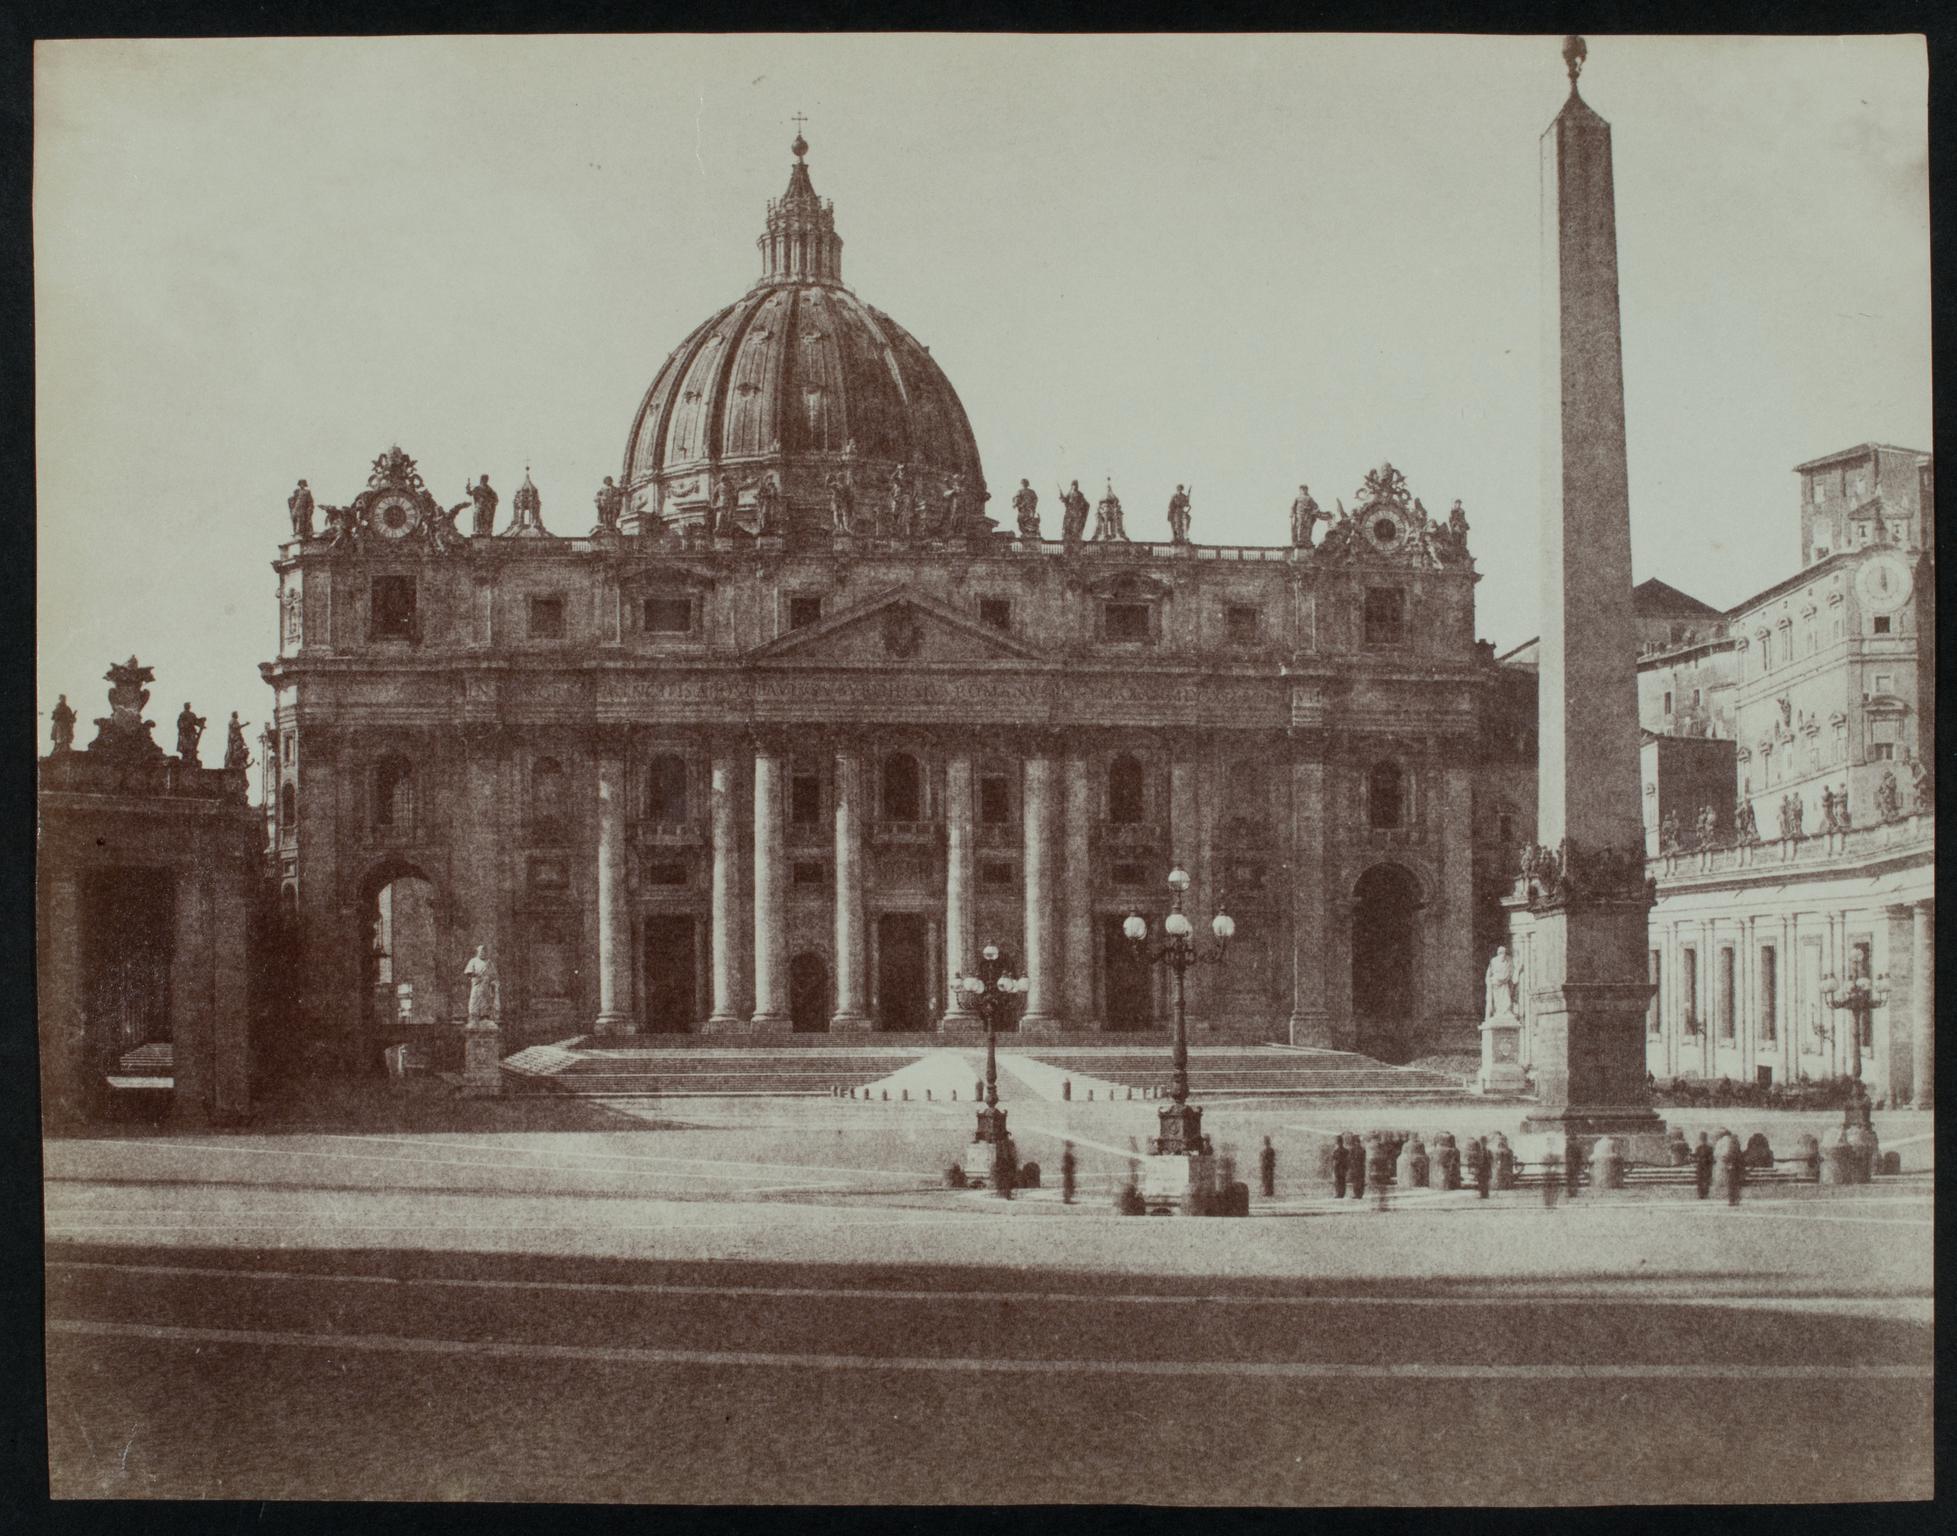 St. Peter's Rome, photograph